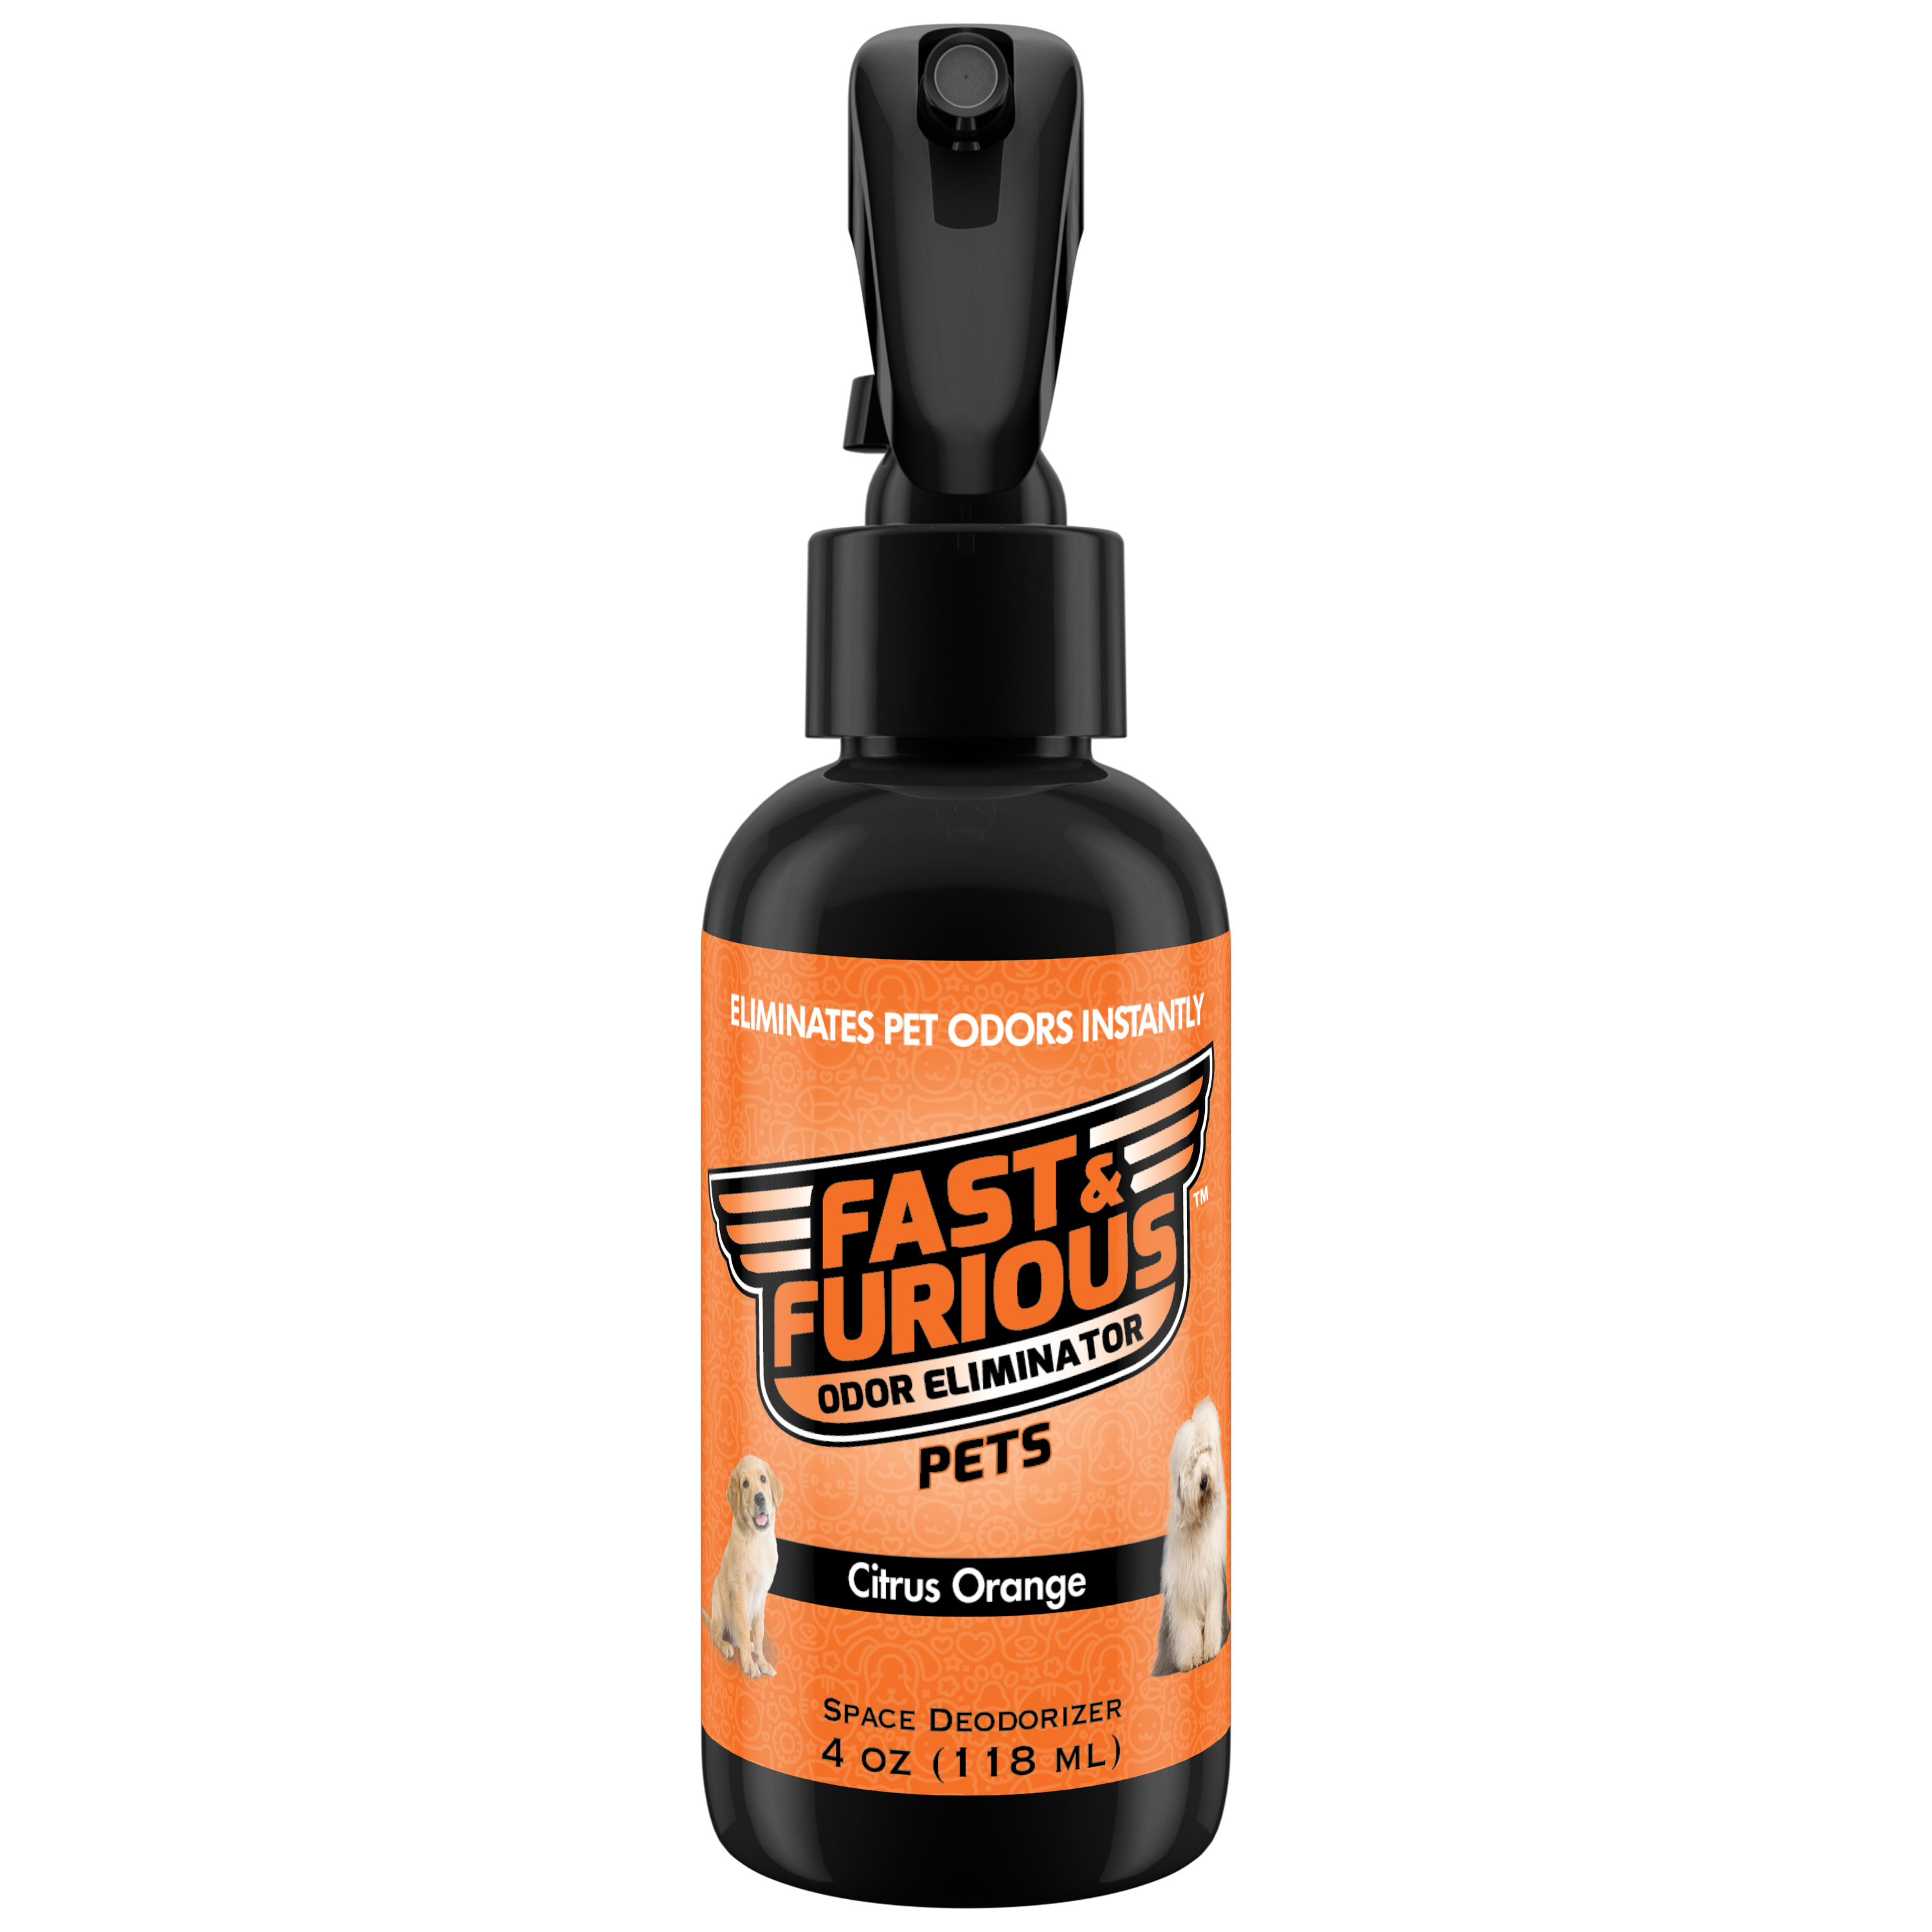 Fast and Furious Pets Odor Eliminator - Citrus Orange Scent